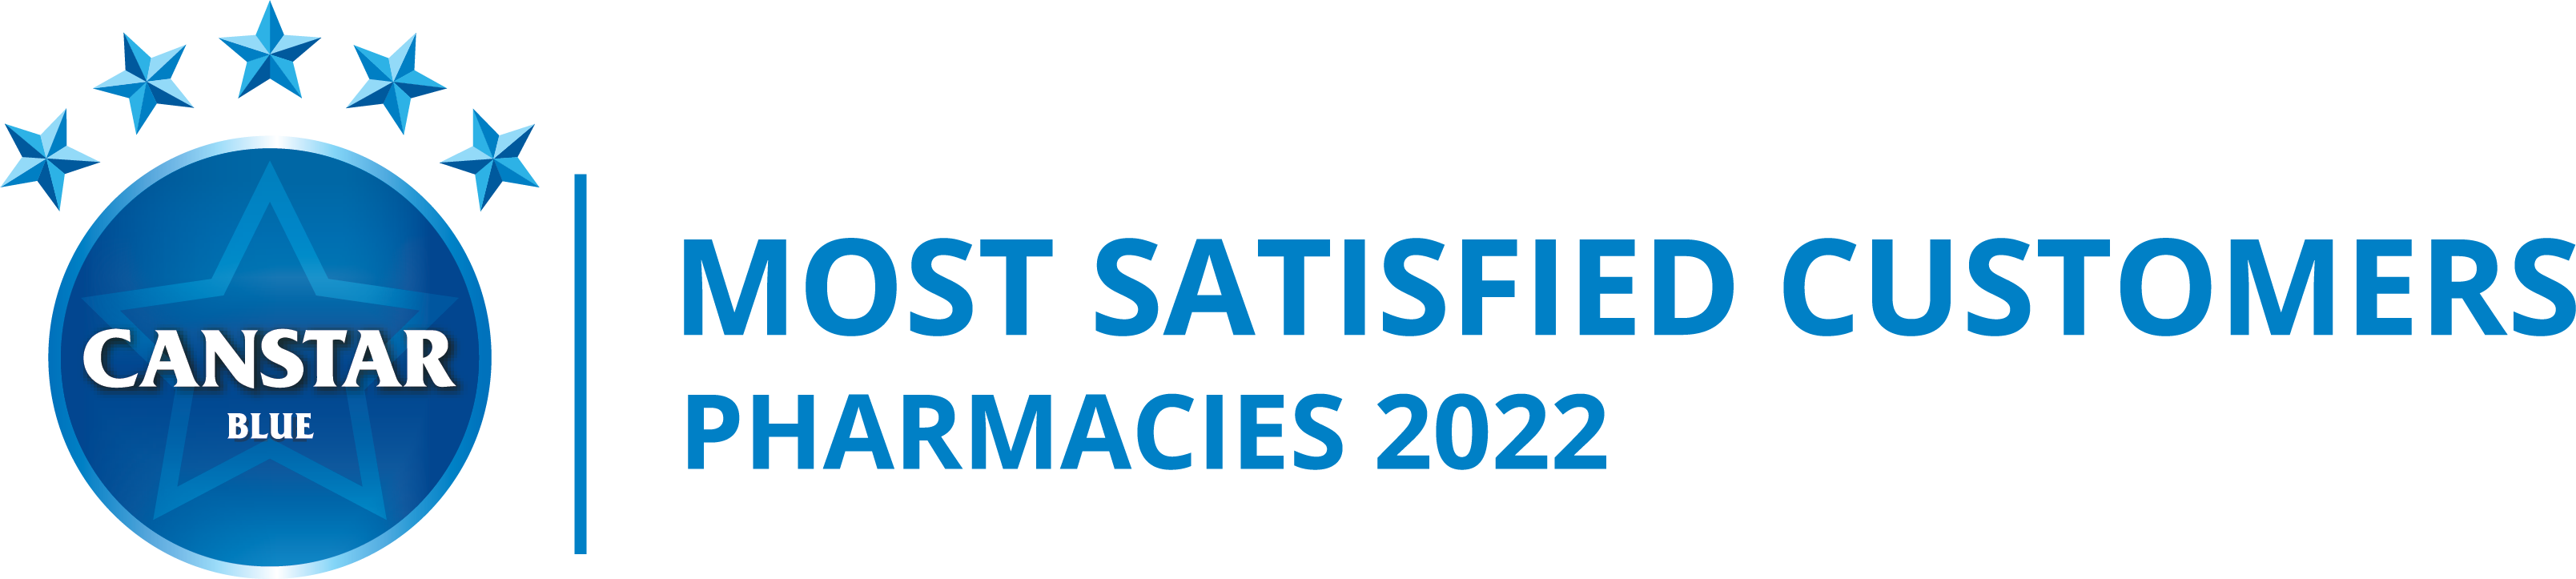 MSC pharmacies 2022 wide logo